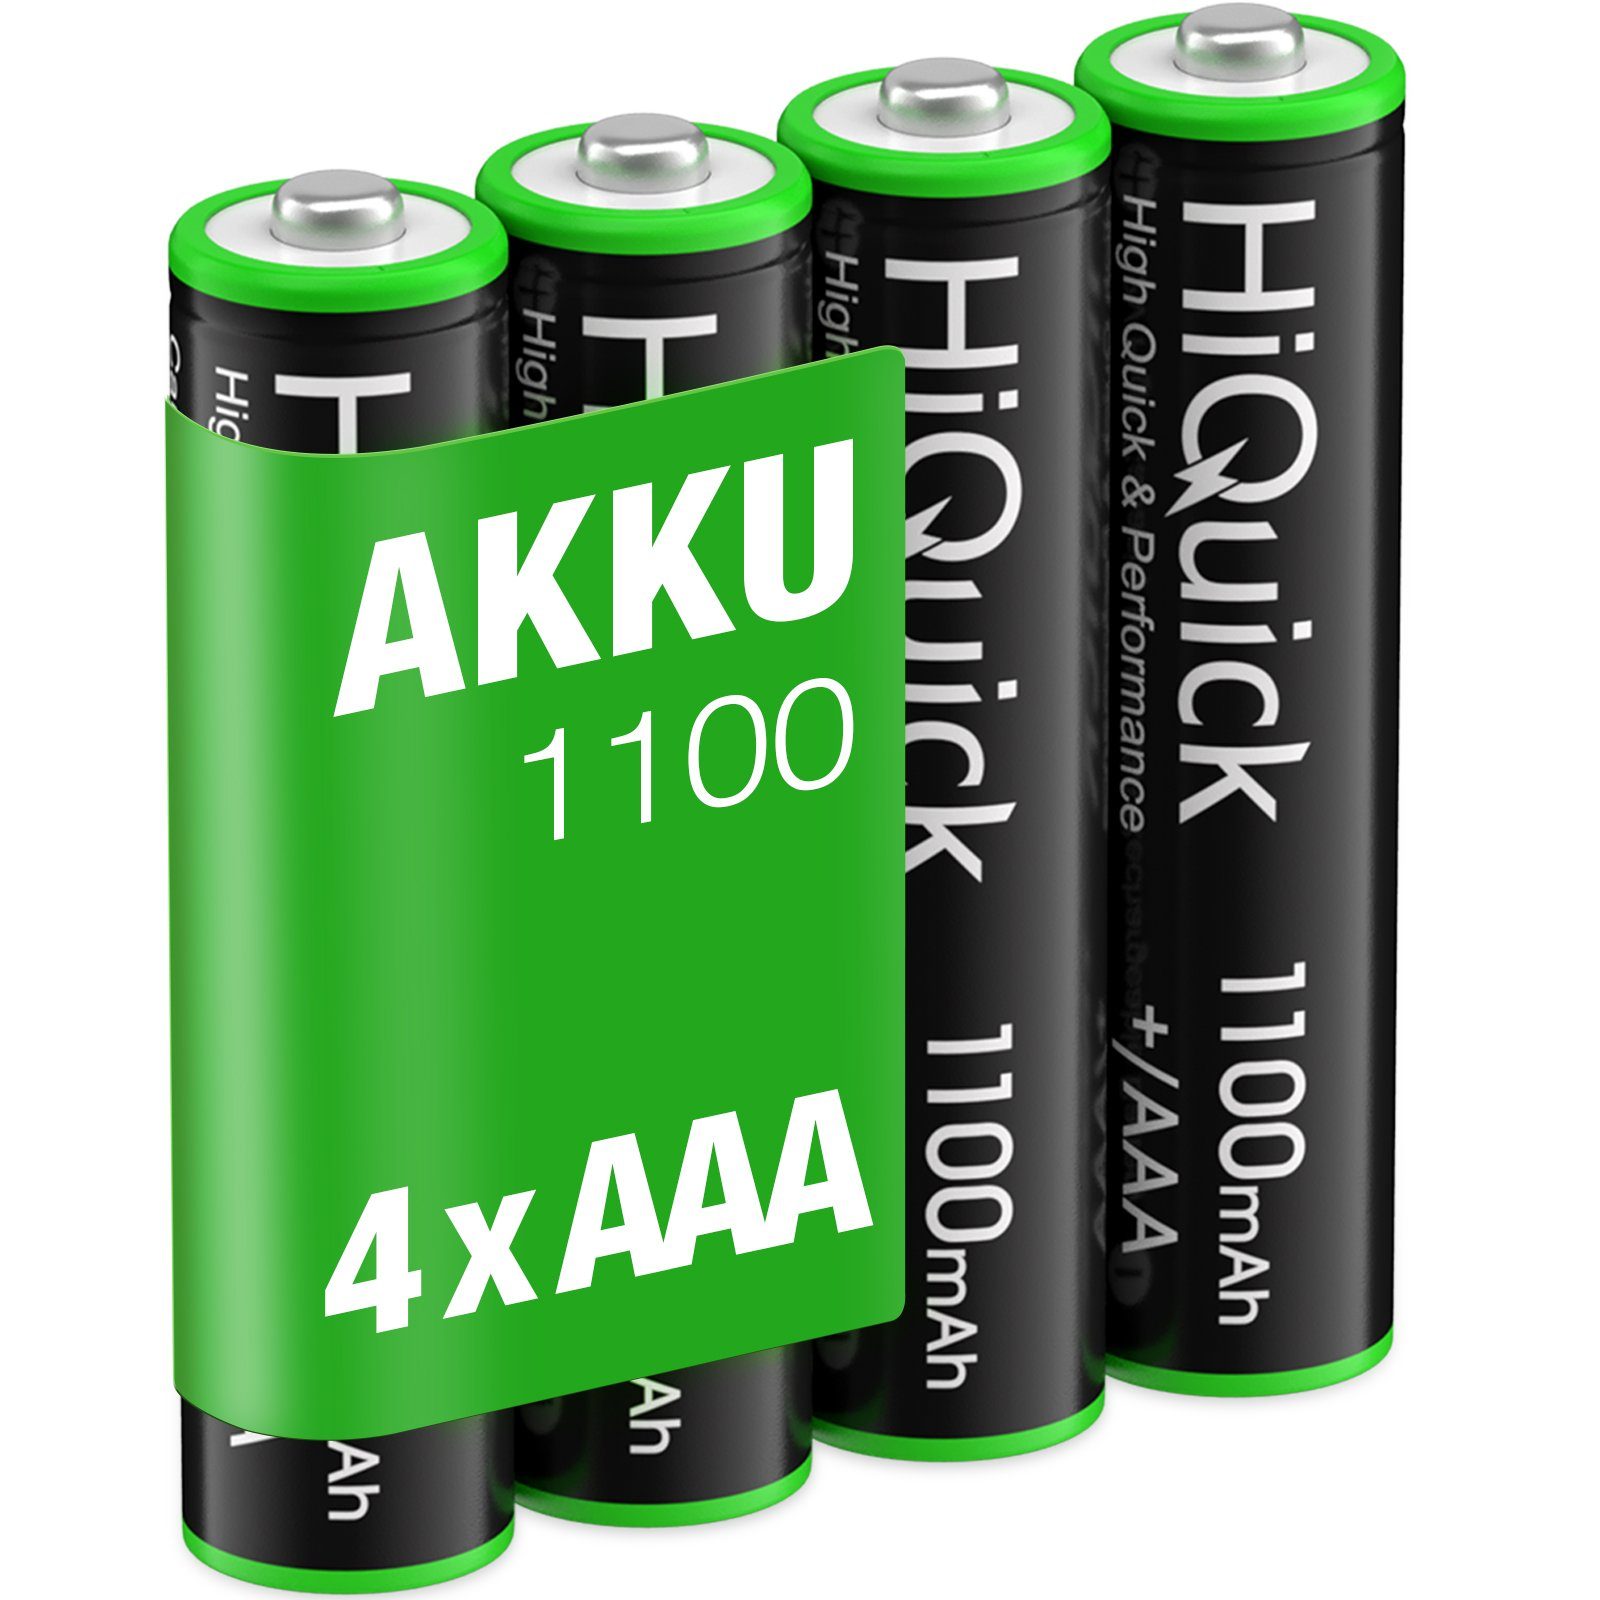 mAh Akku HiQuick wiederaufladbar (1.2 AAA 4 NiMH V) 1100 1,2V-Batterien Stück 1110mAh Mignon Akku